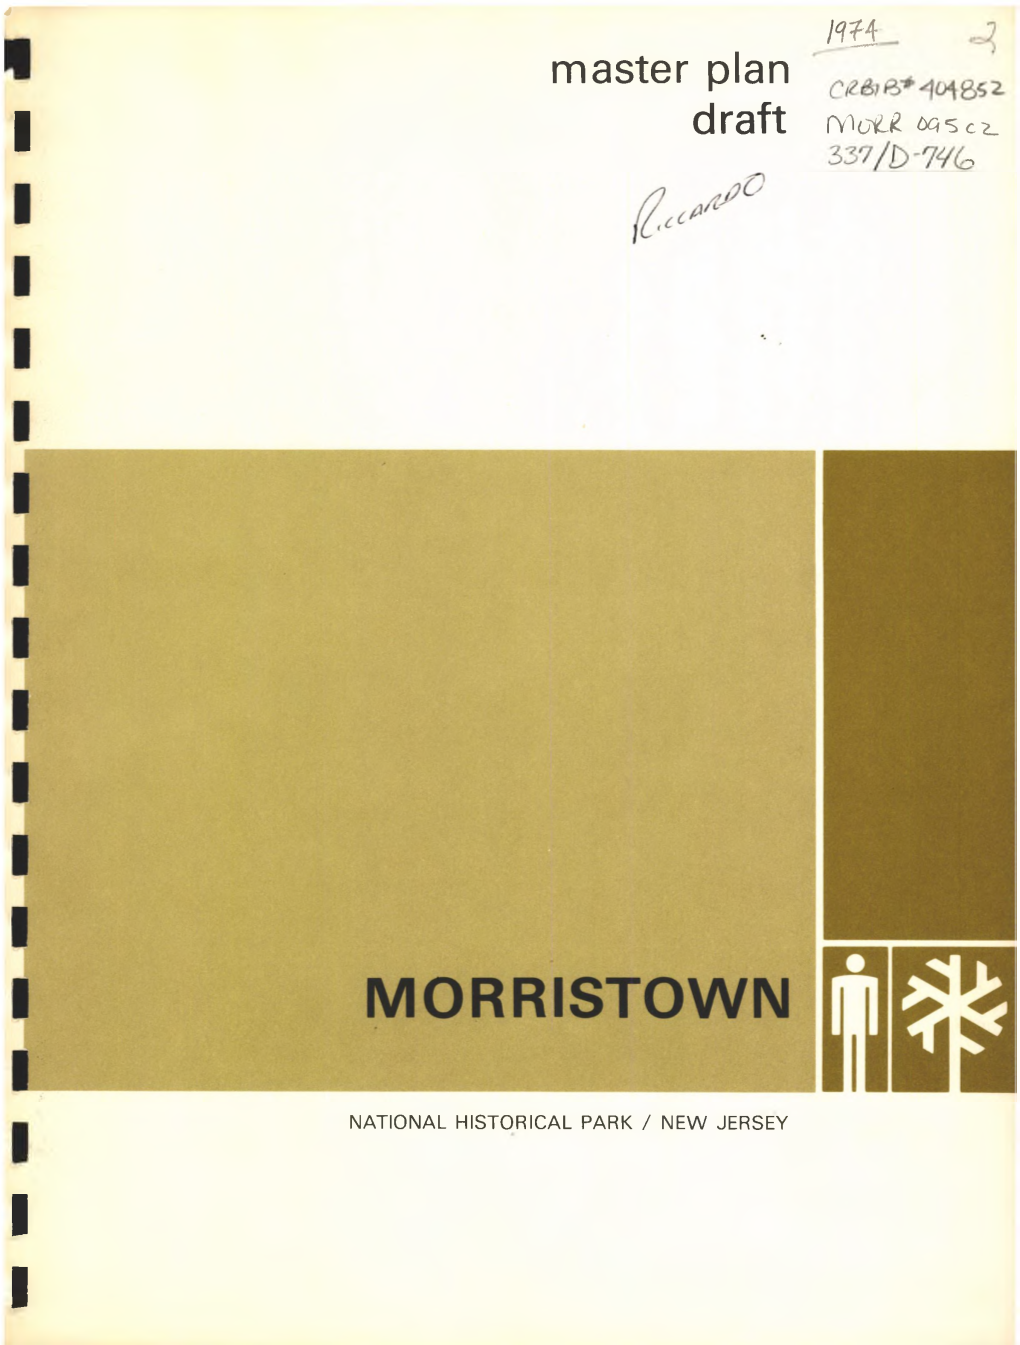 Draft Master Plan, Morristown National Historical Park, New Jersey